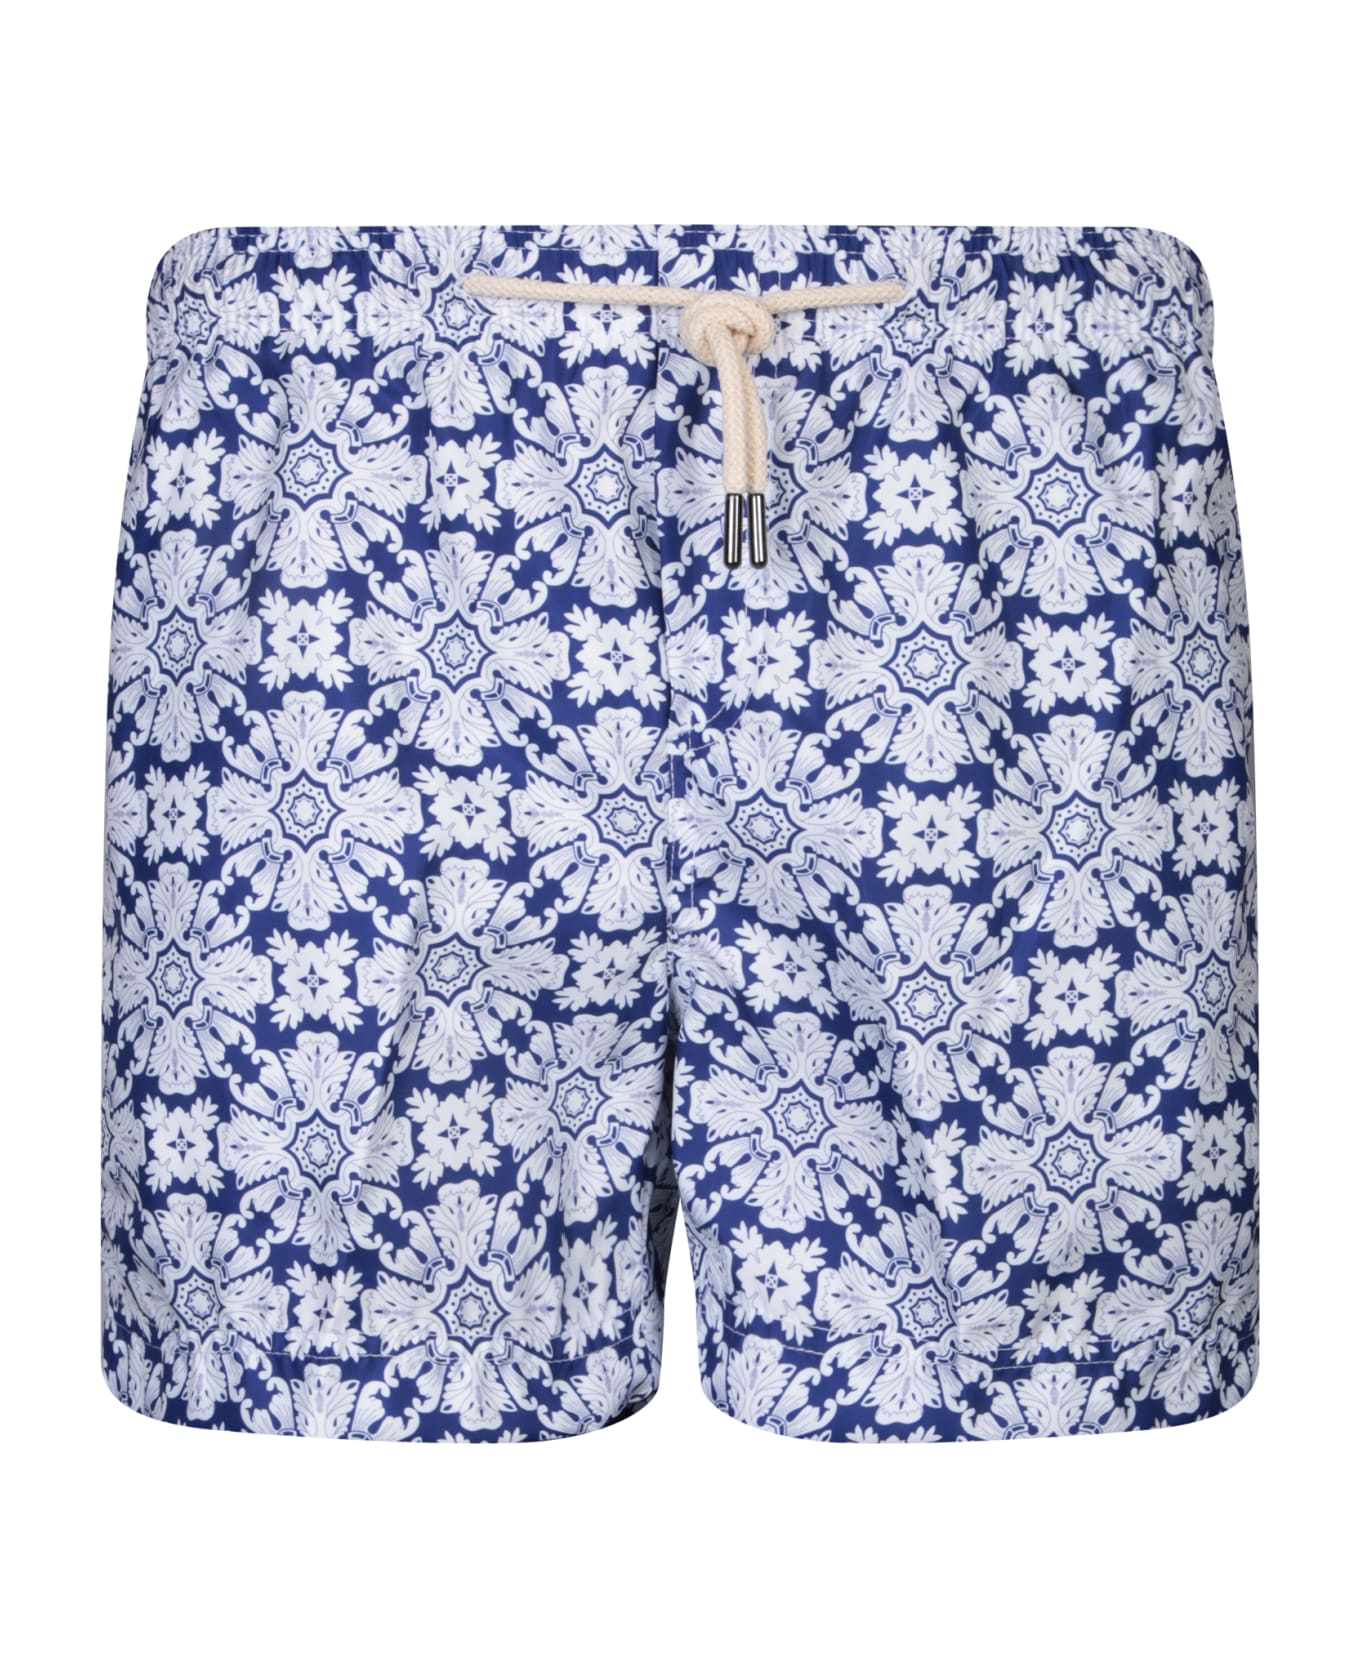 Peninsula Swimwear Floral Pattern Swim Shorts White/blue - Blue